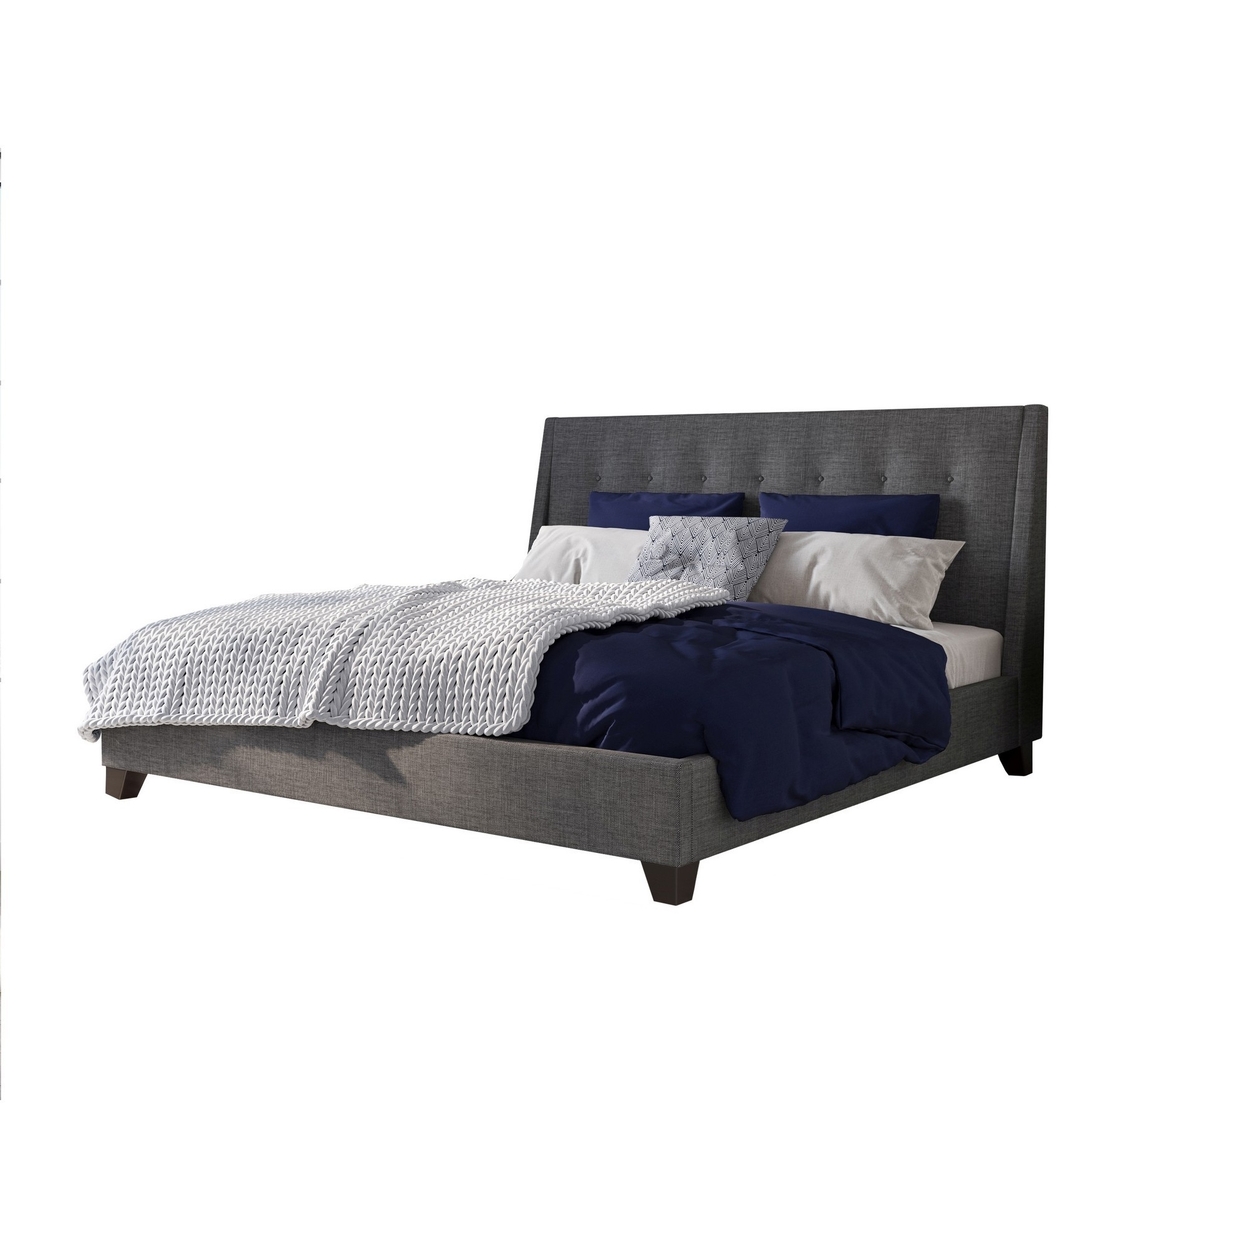 Atina Full Bed, Dark Charcoal Gray Linen Upholstered, Slanted Headboard - Saltoro Sherpi